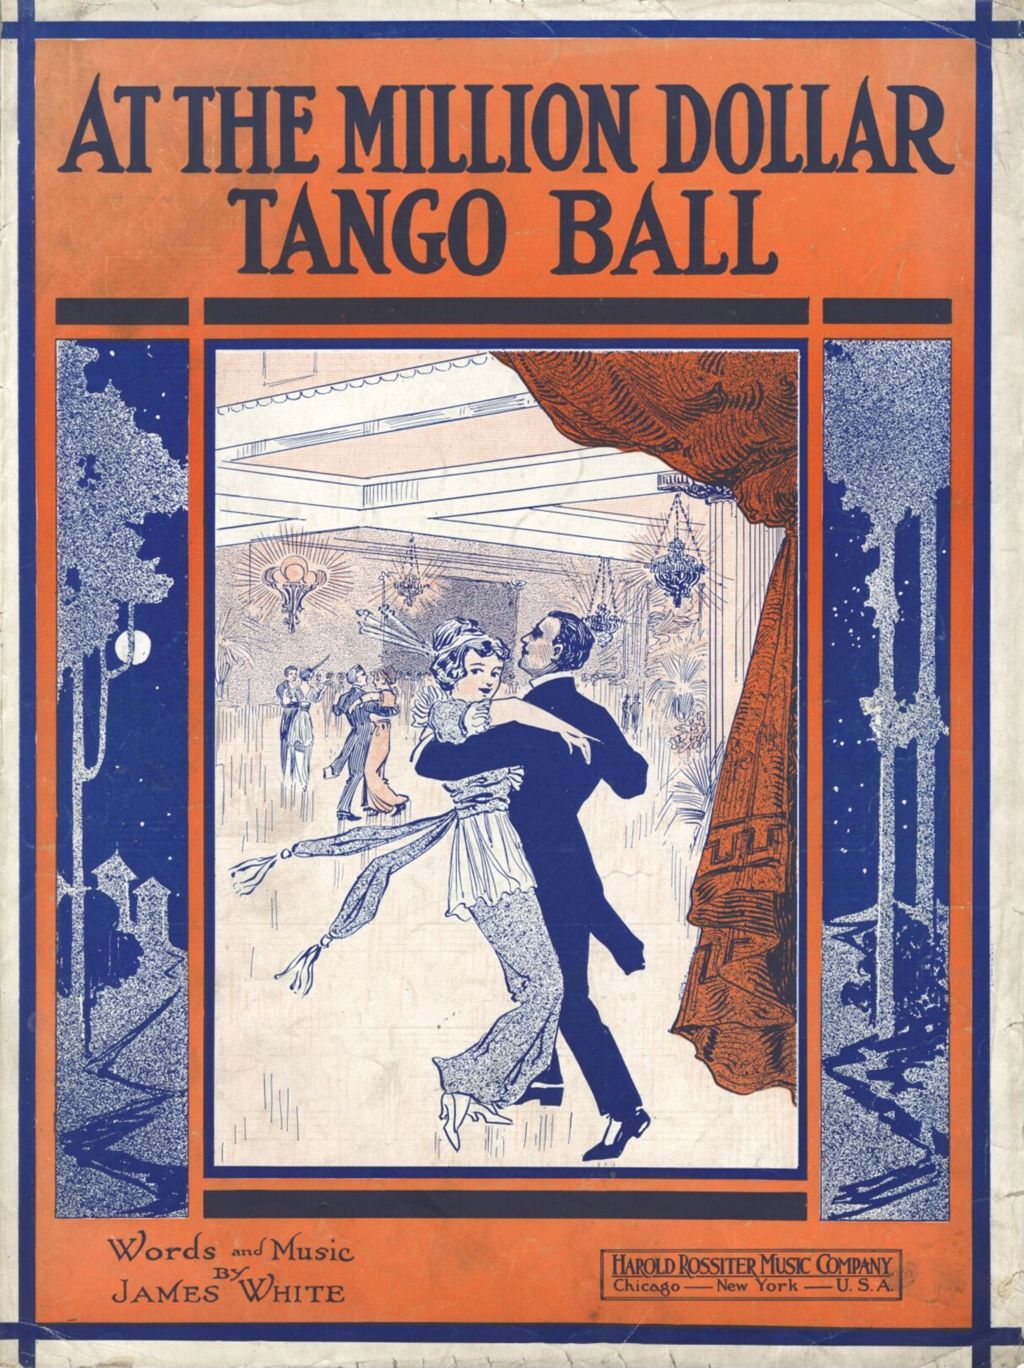 At the Million Dollar Tango Ball